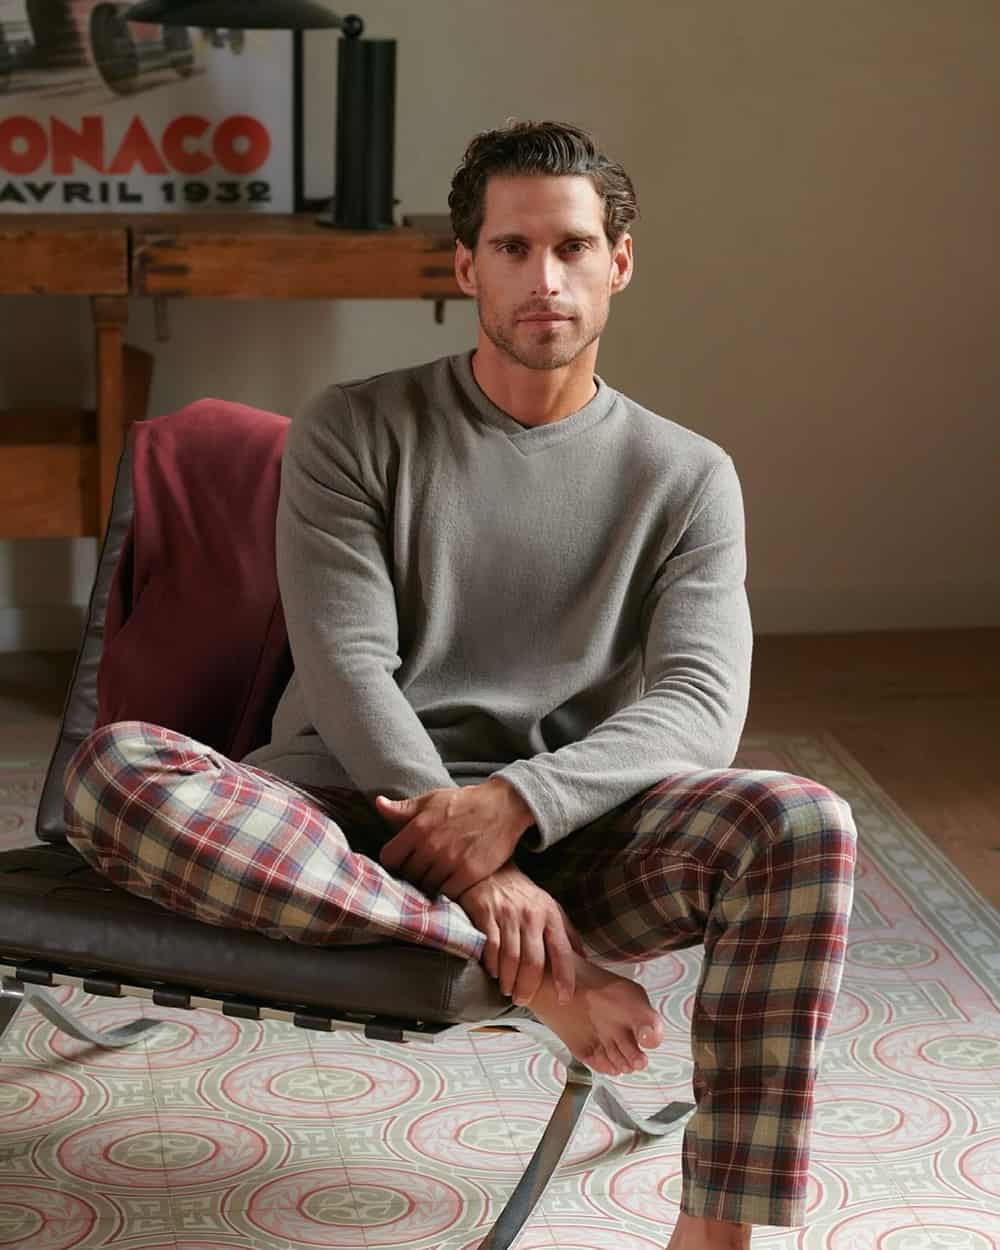 Man wearing Hanro grey lounge top and red tartan check pajama bottoms